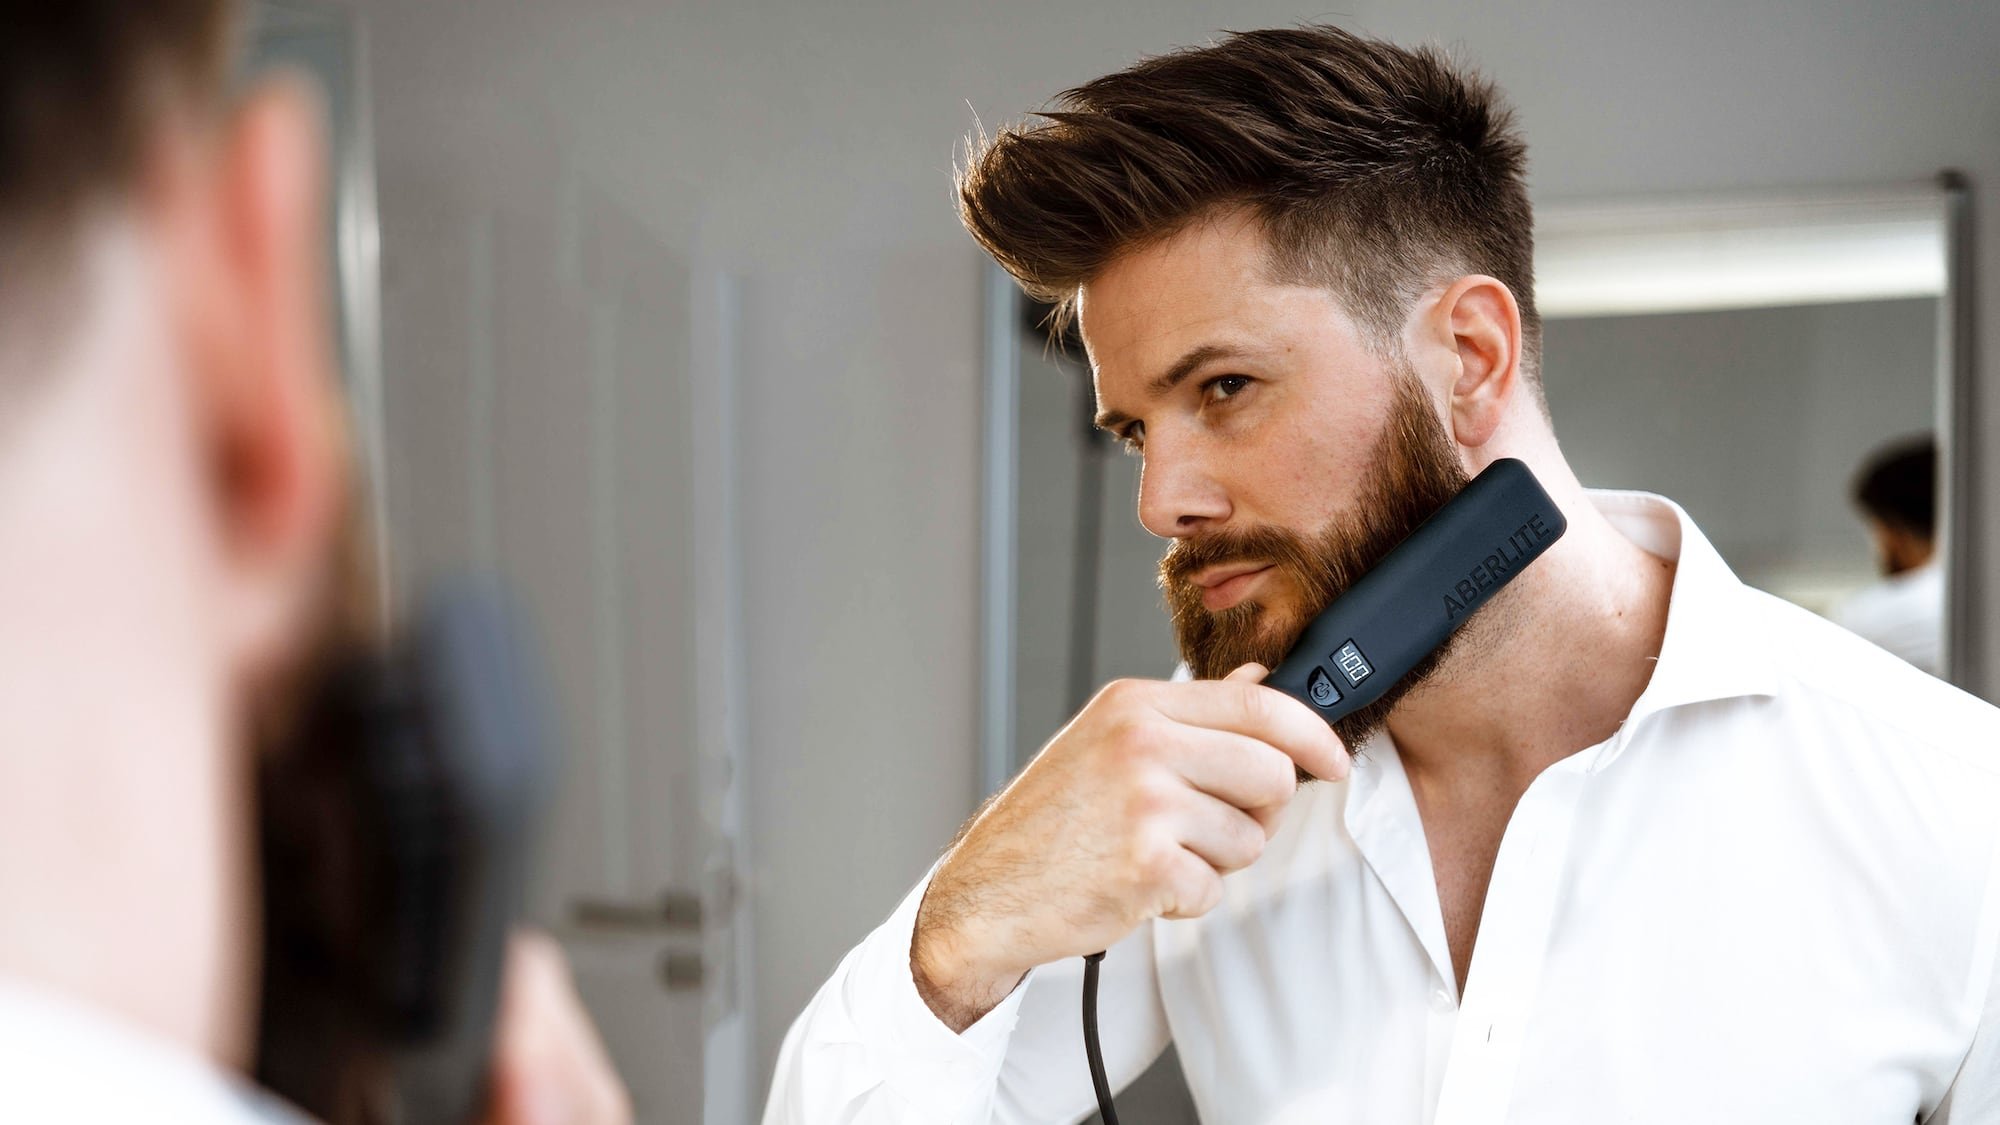 Aberlite Pro advanced purpose-built beard and hair straightener works in just 2 minutes